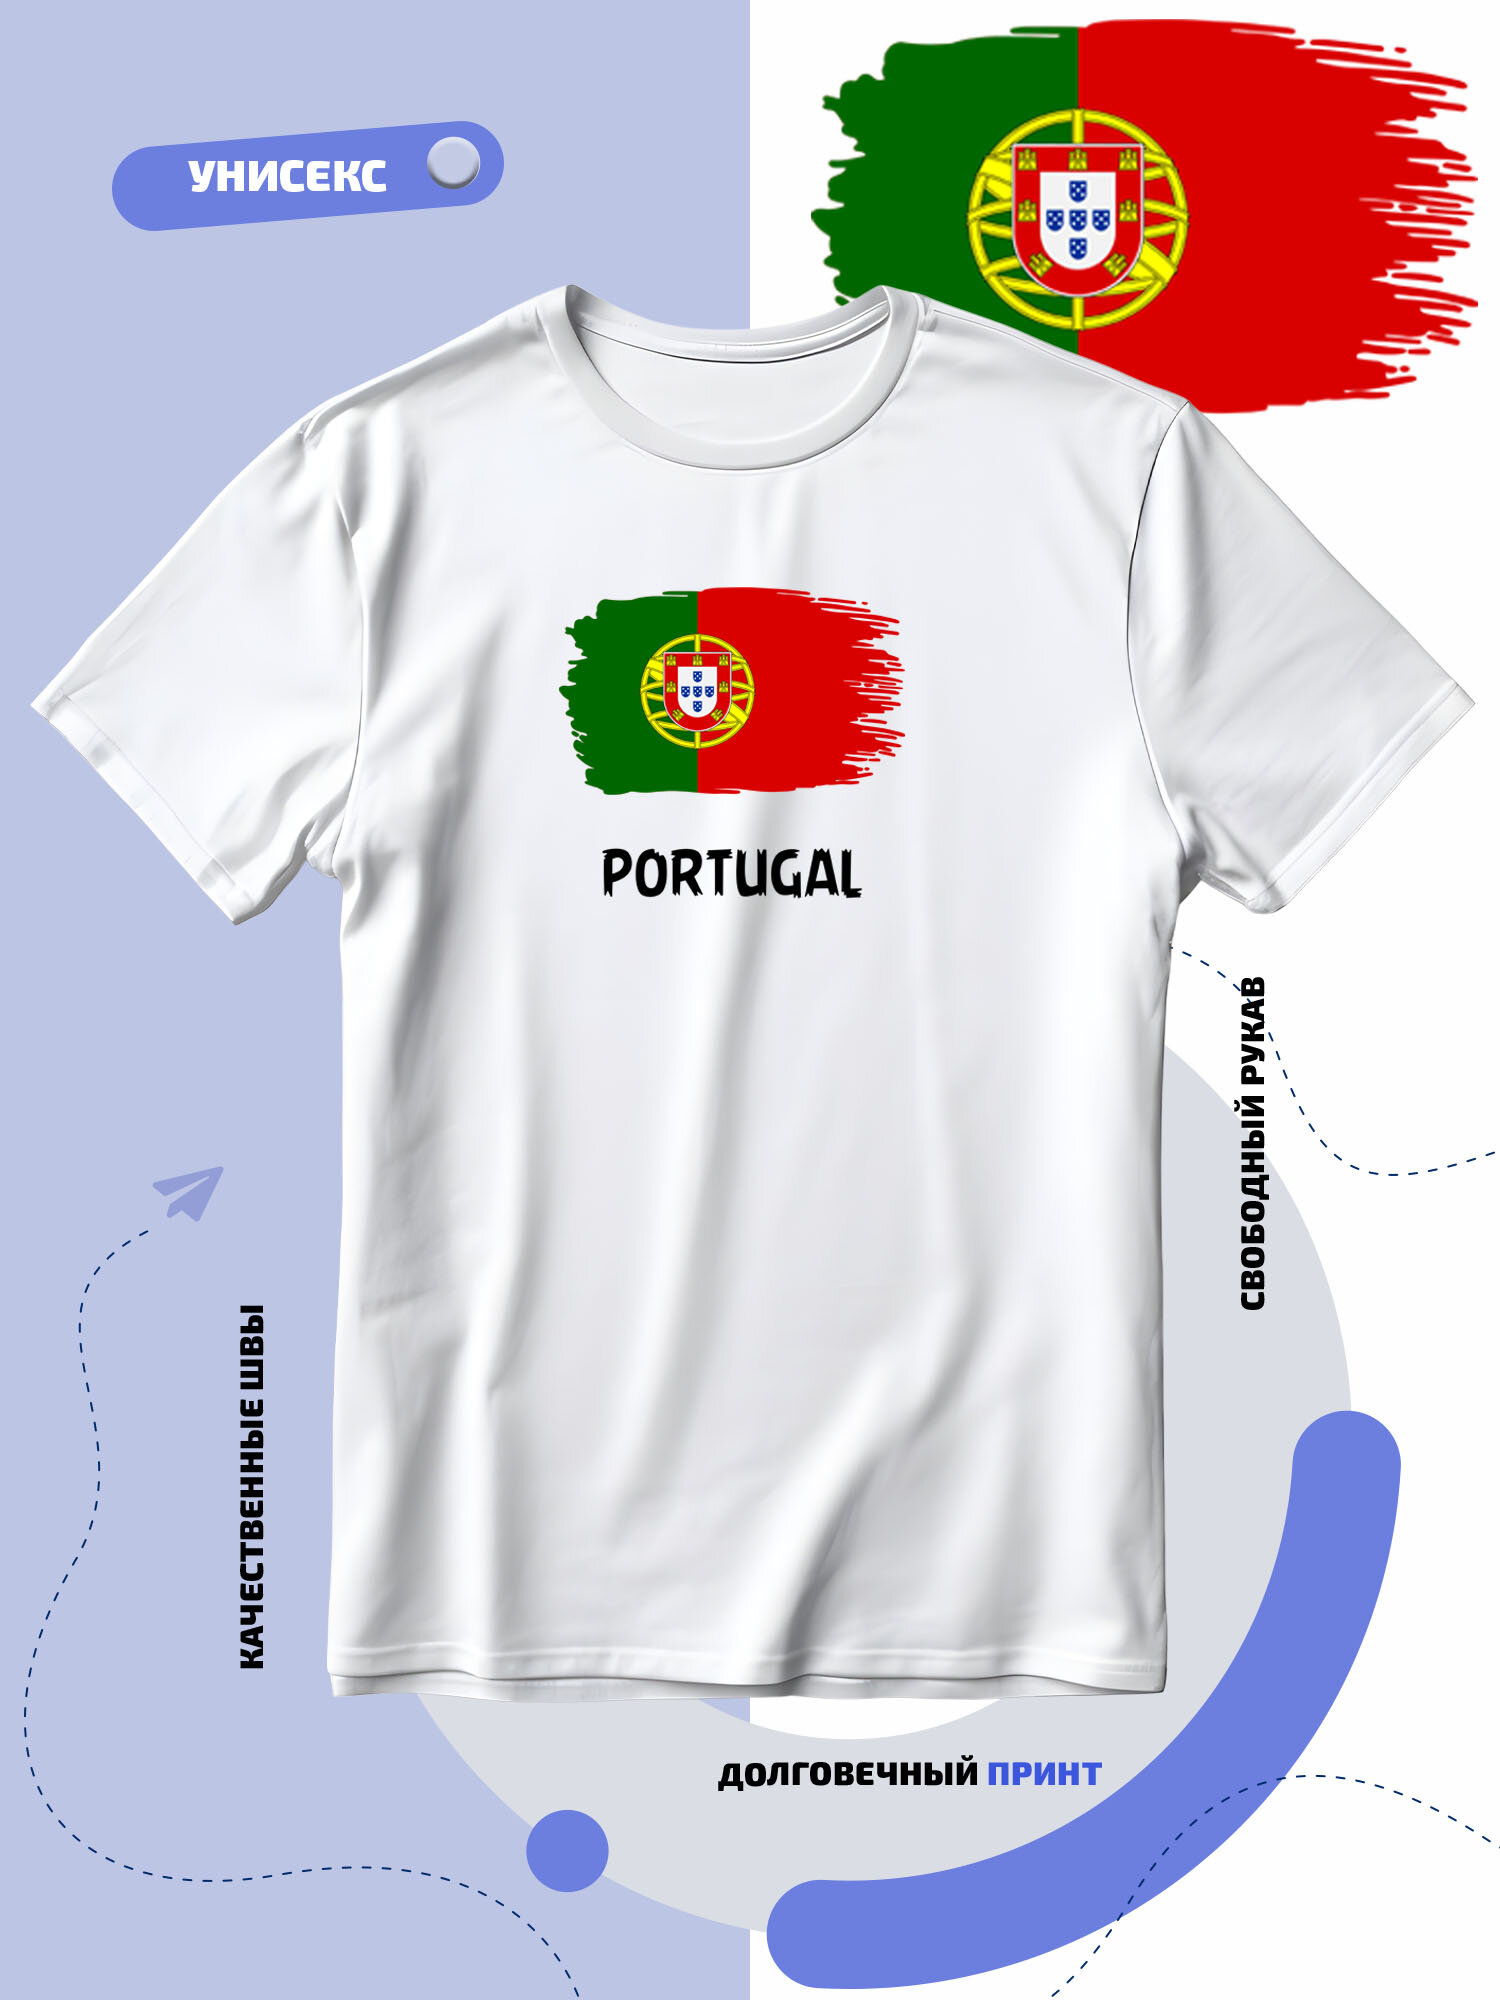 Футболка SMAIL-P с флагом Португалии-Portugal